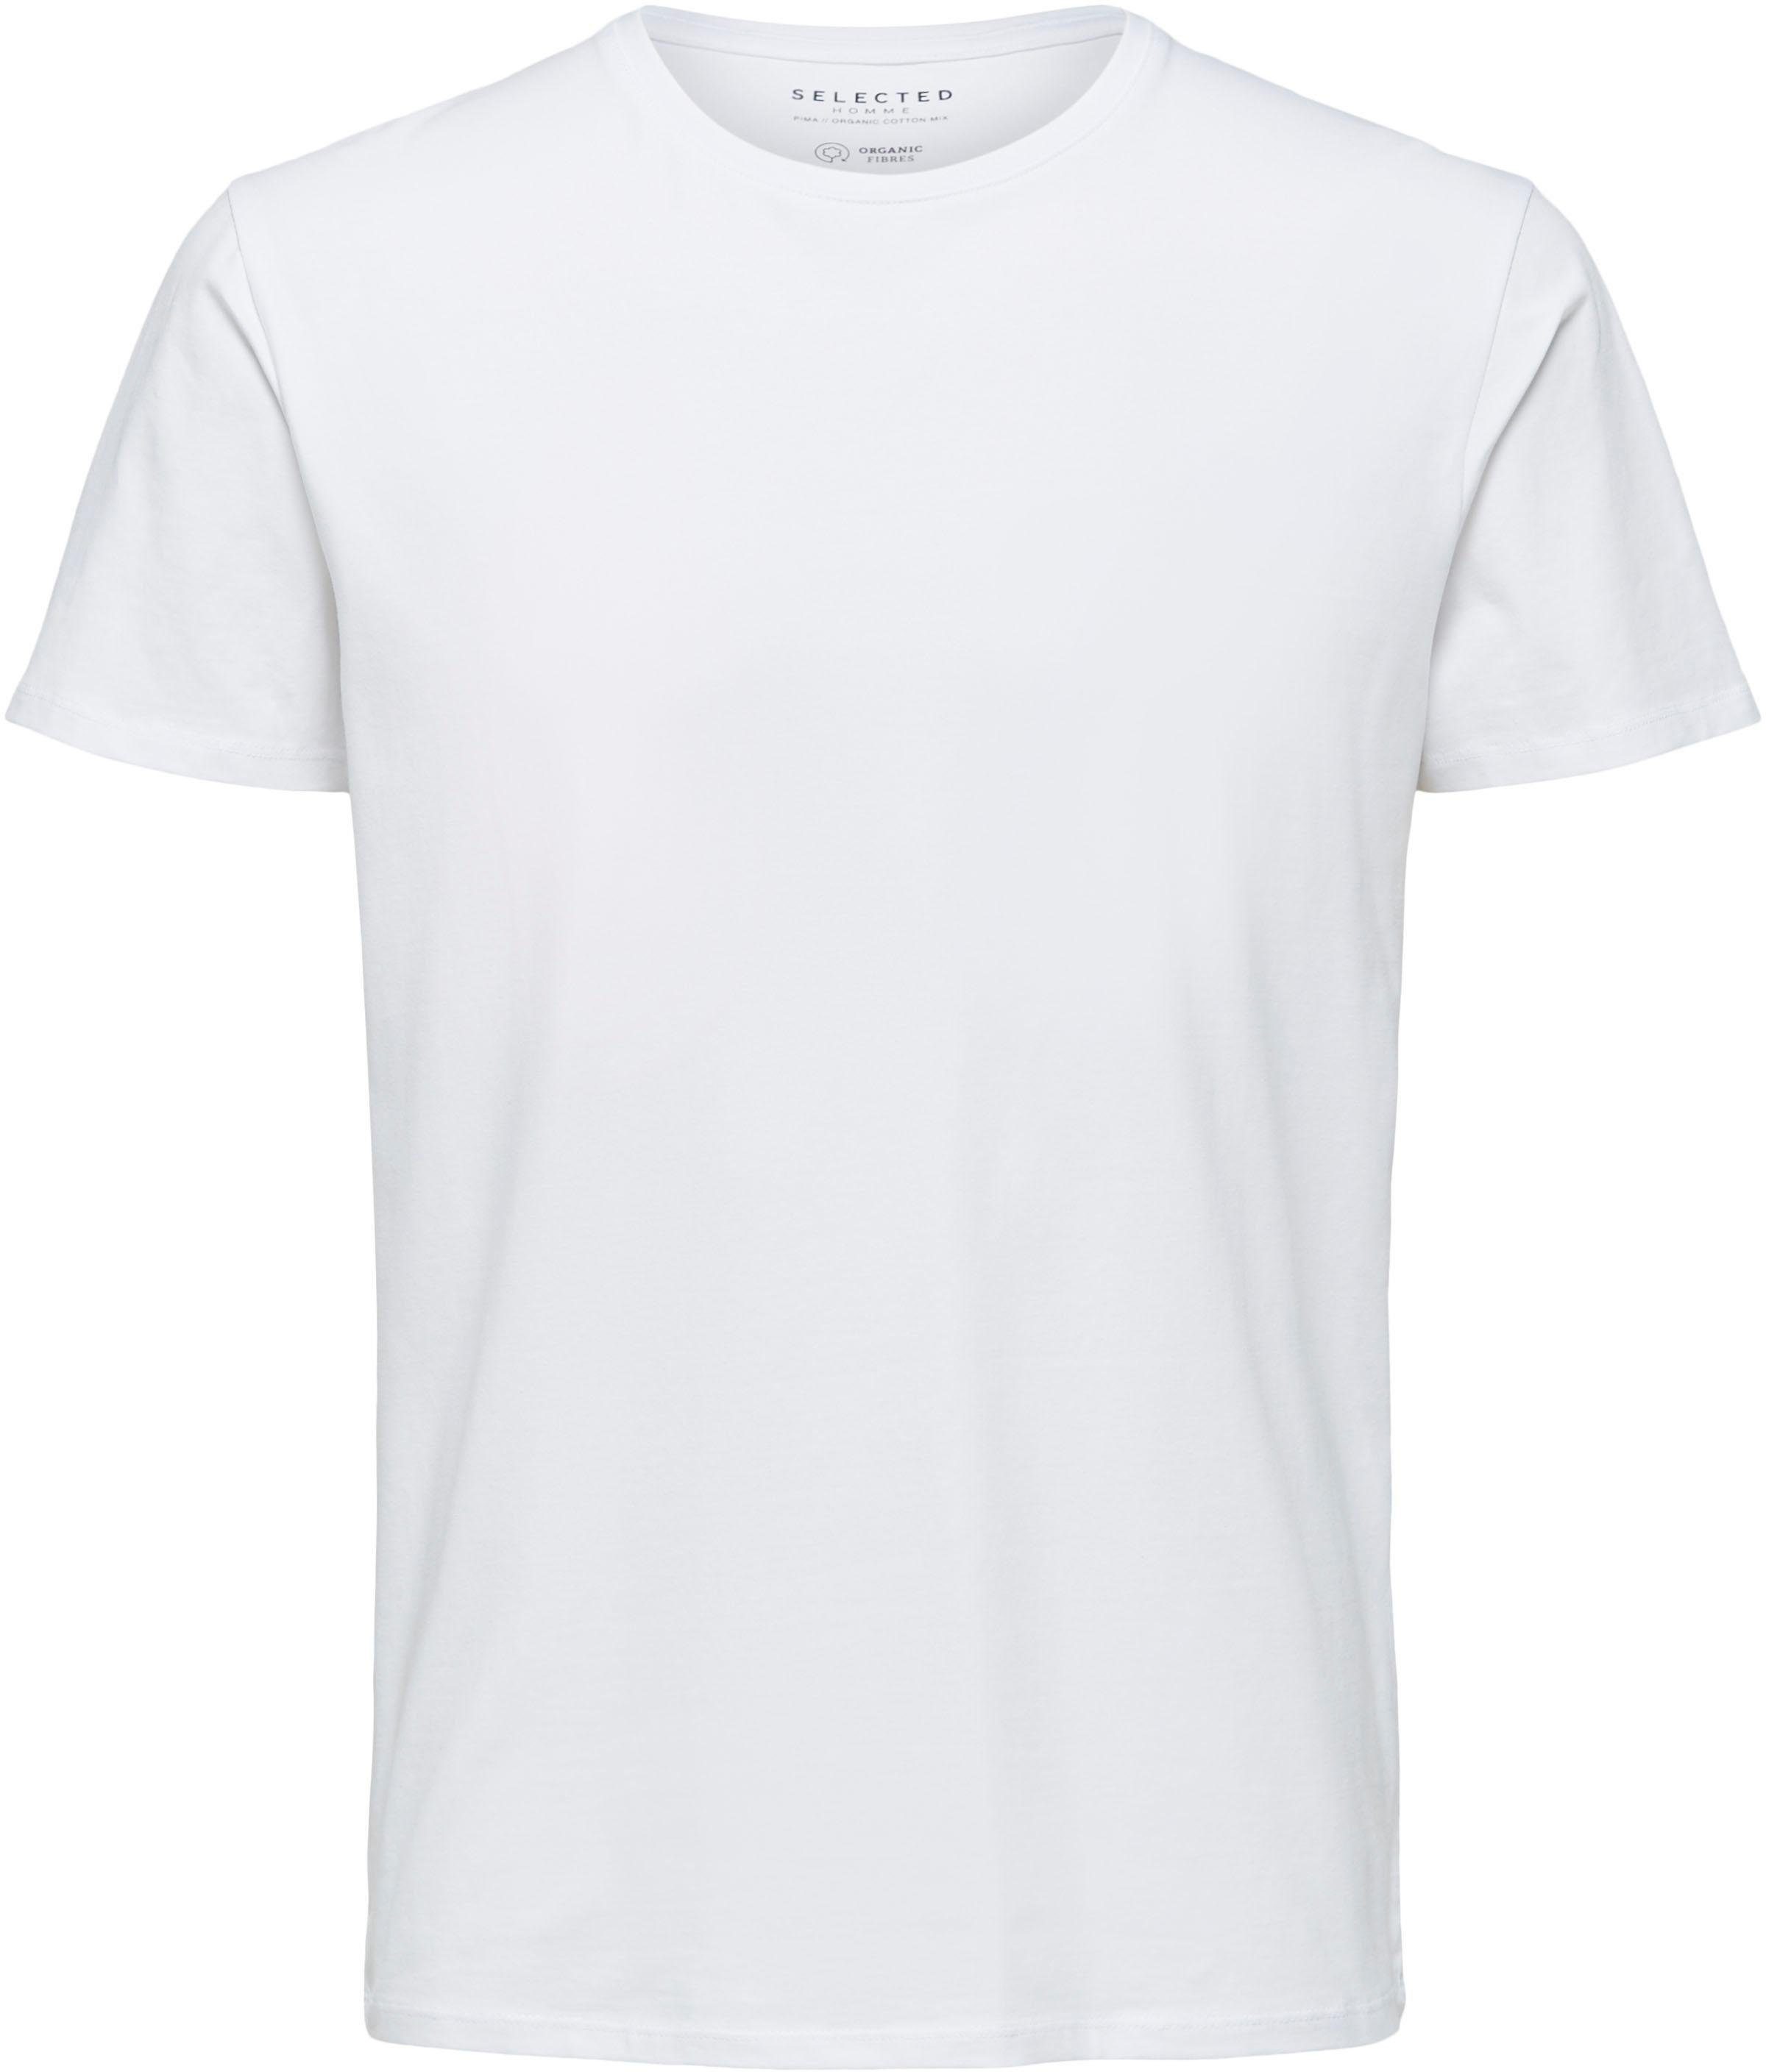 White SELECTED Basic Rundhalsshirt T-Shirt Bright HOMME